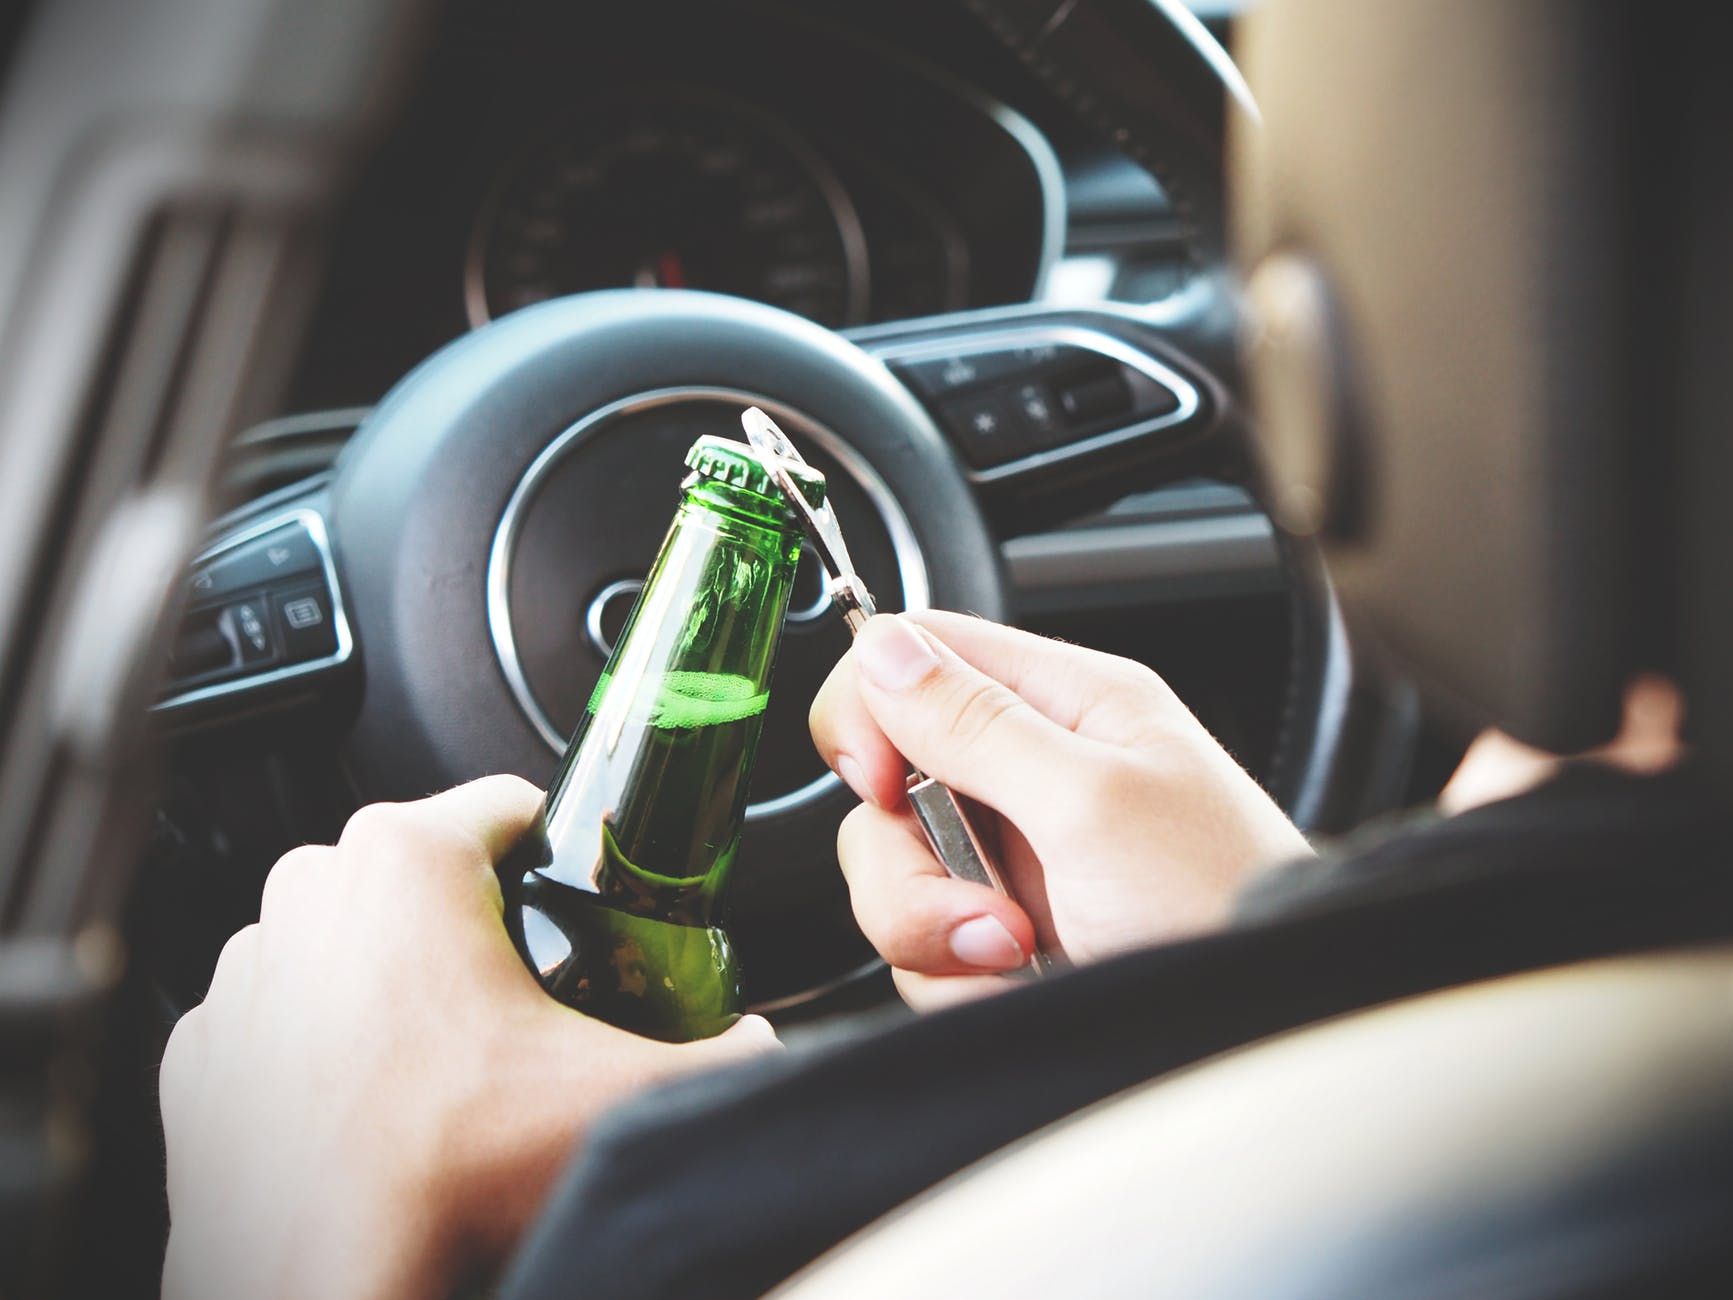 Bafômetro: As consequências de beber e dirigir